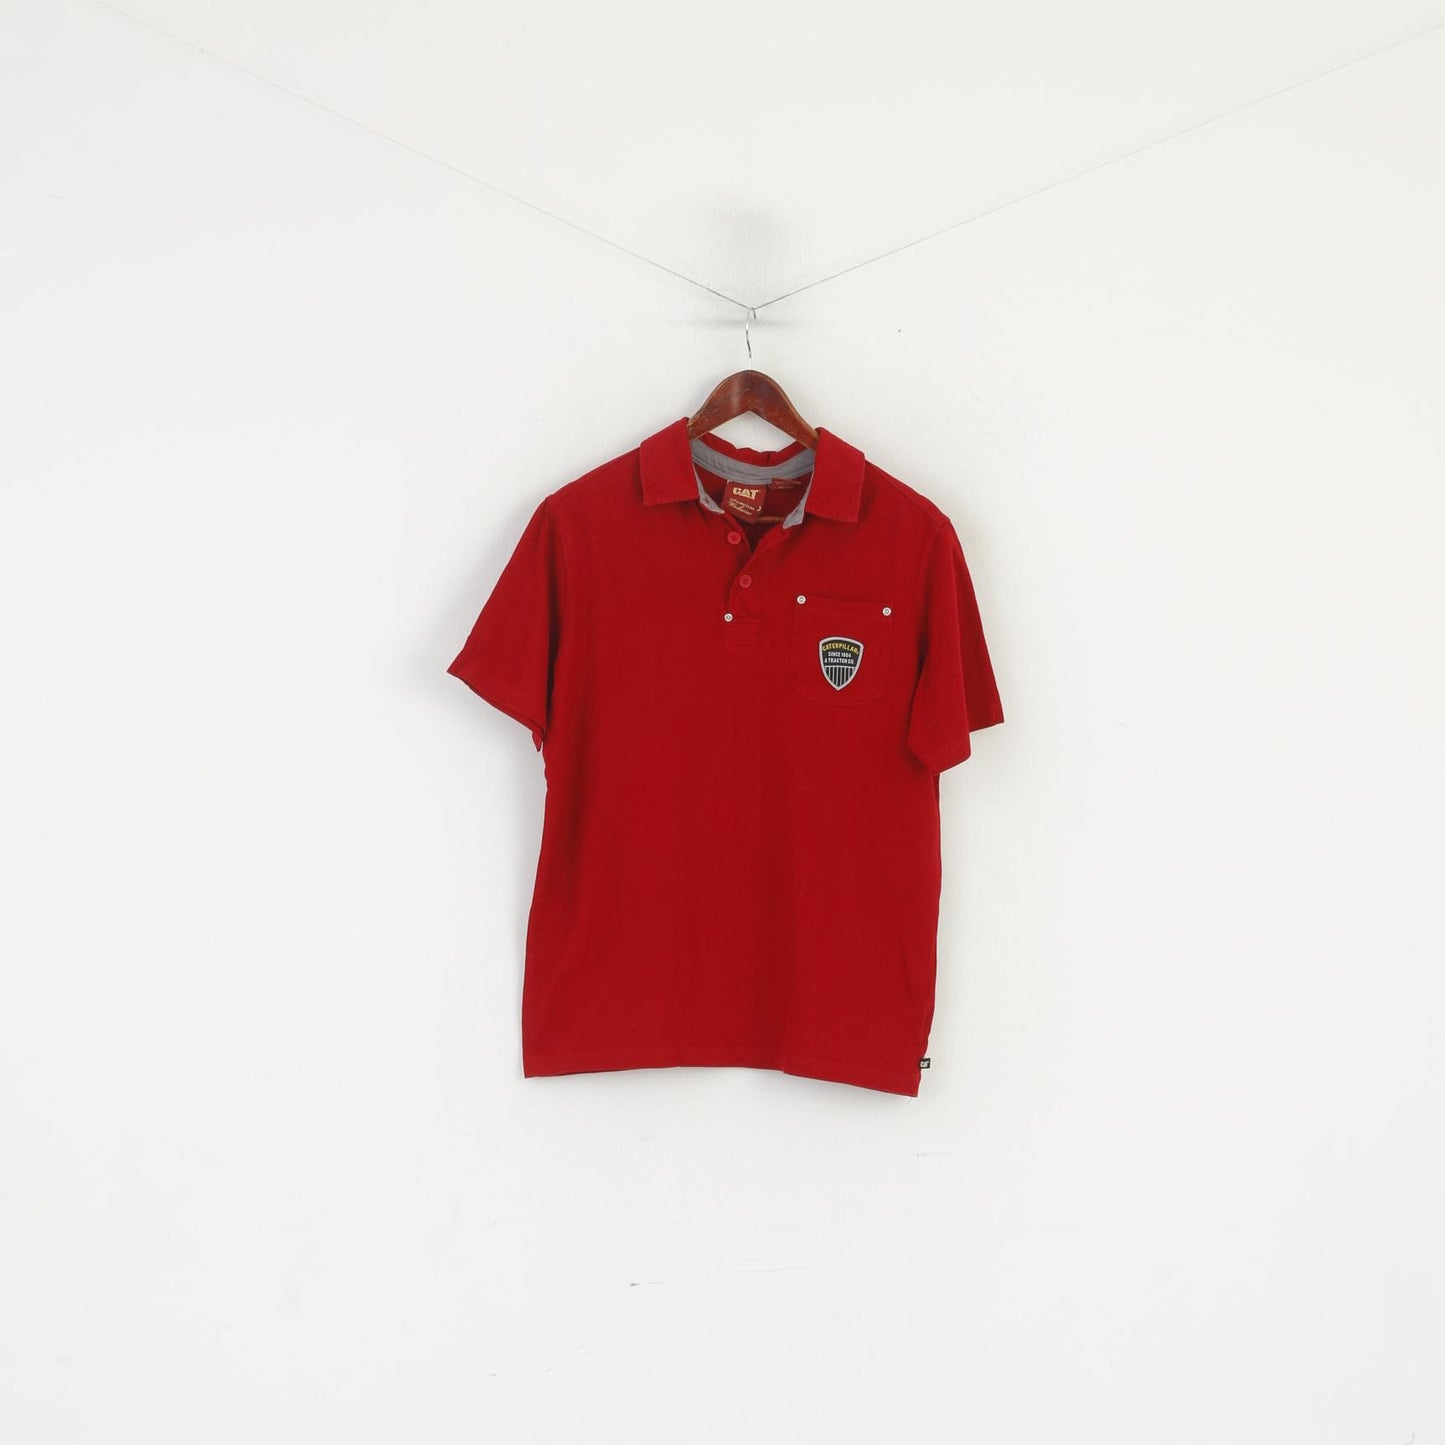 CAT Caterpillar Men S Polo Shirt Red Cotton Premium Workwear Pocket Top